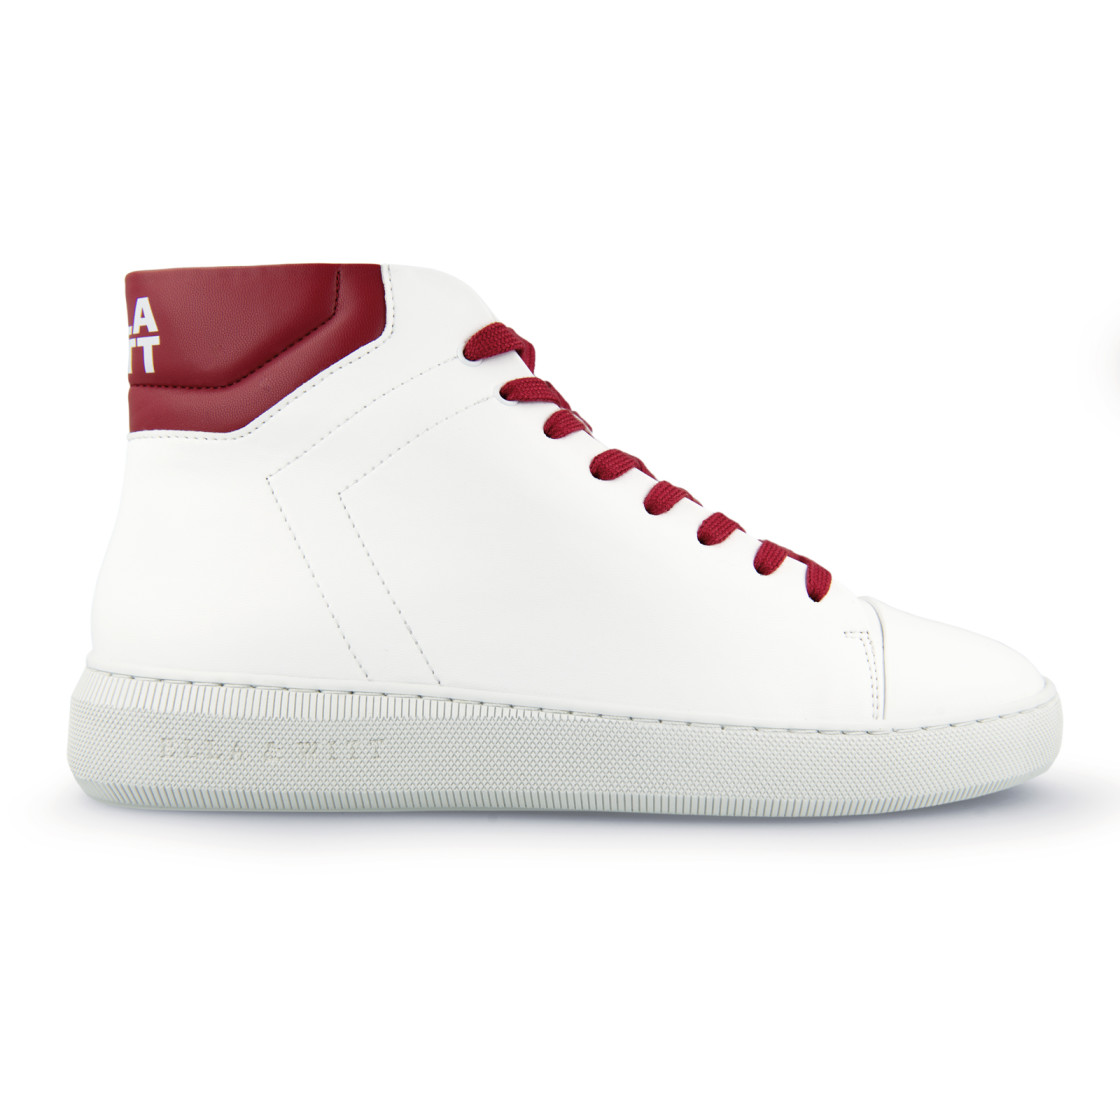 ew 220 200 002 adams white red men The Best Fair Trade Sneakers in 2022